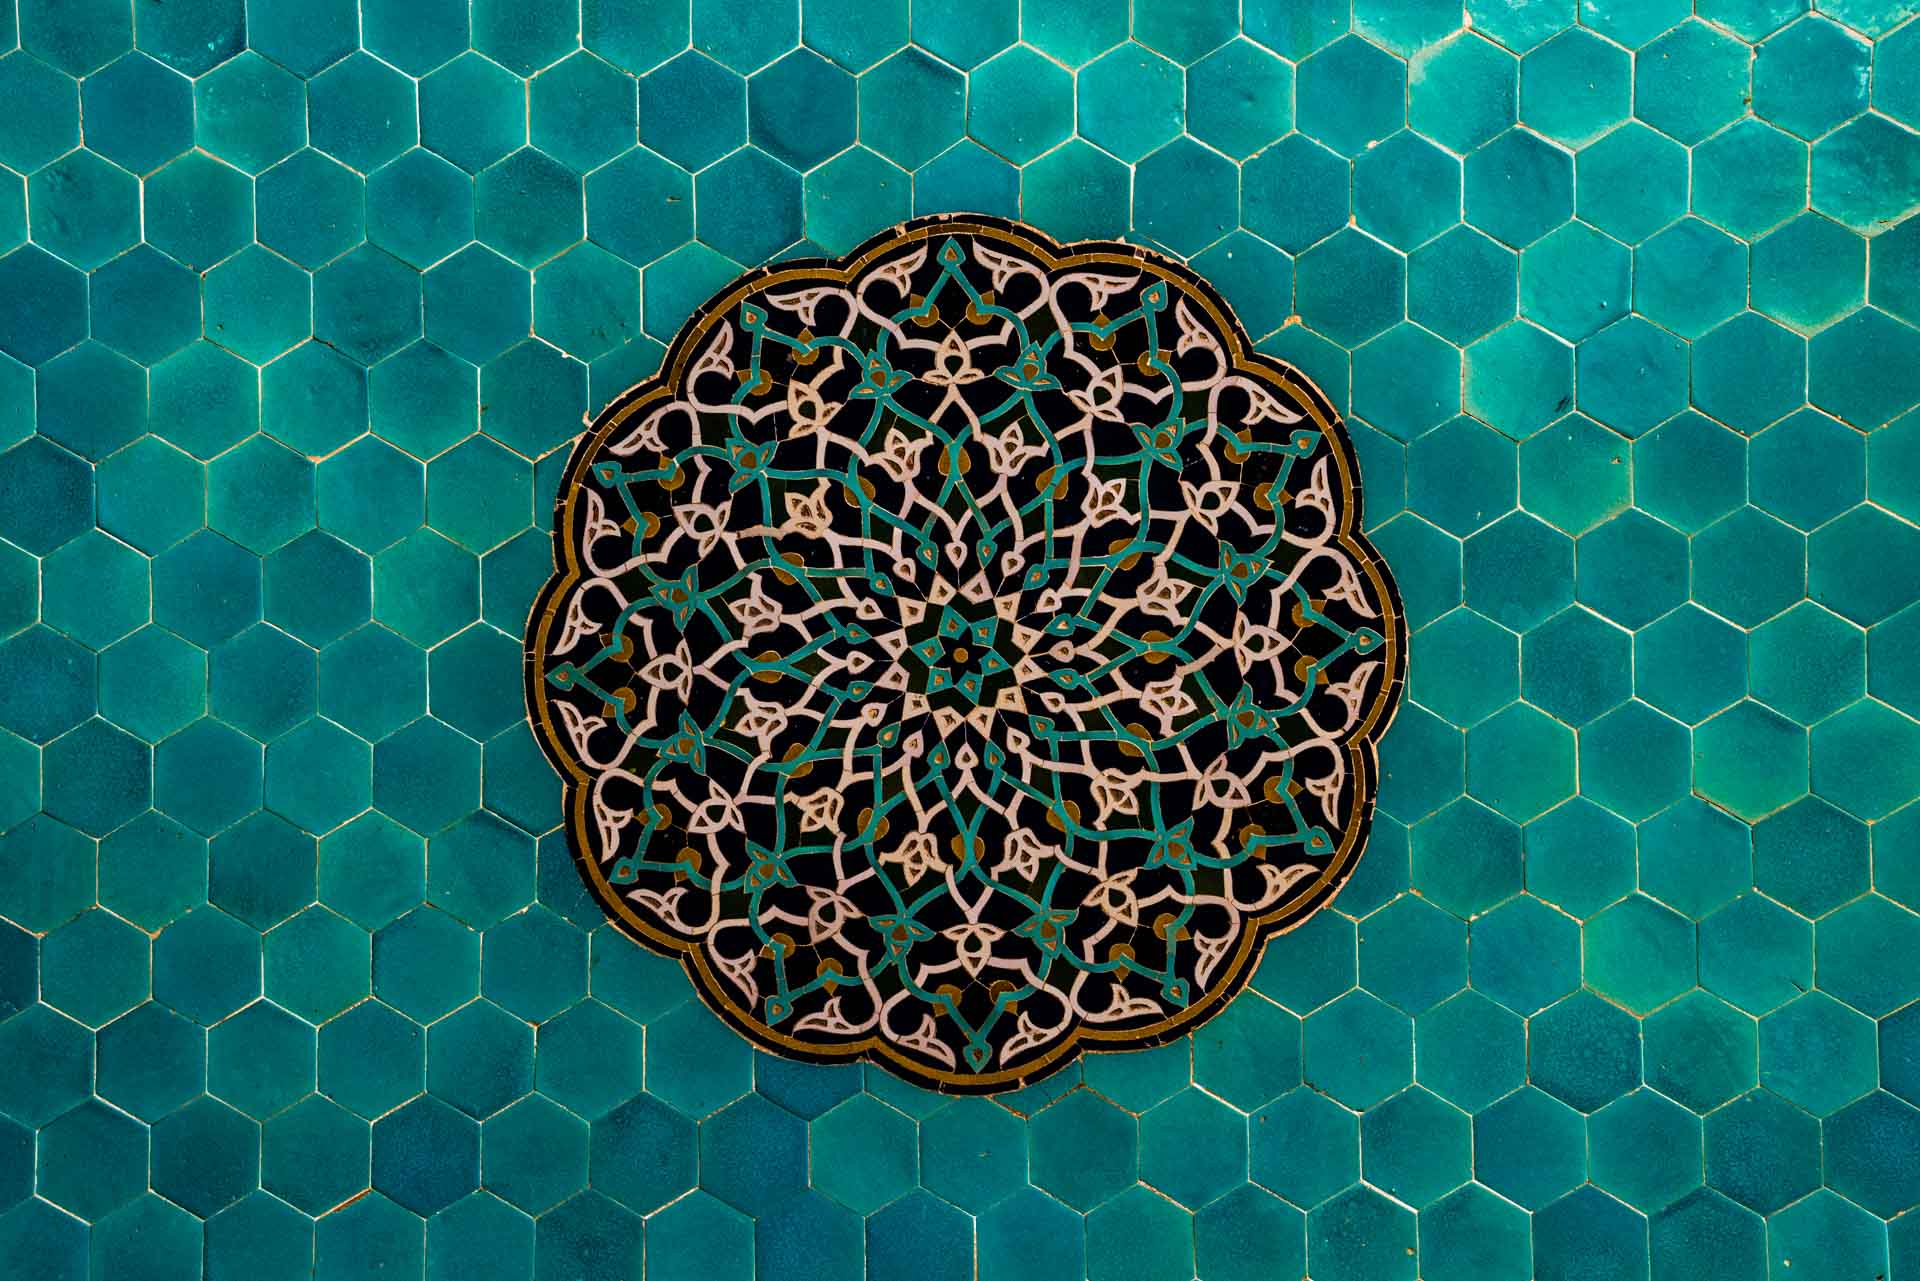 Yazd Jame Mosque tile work